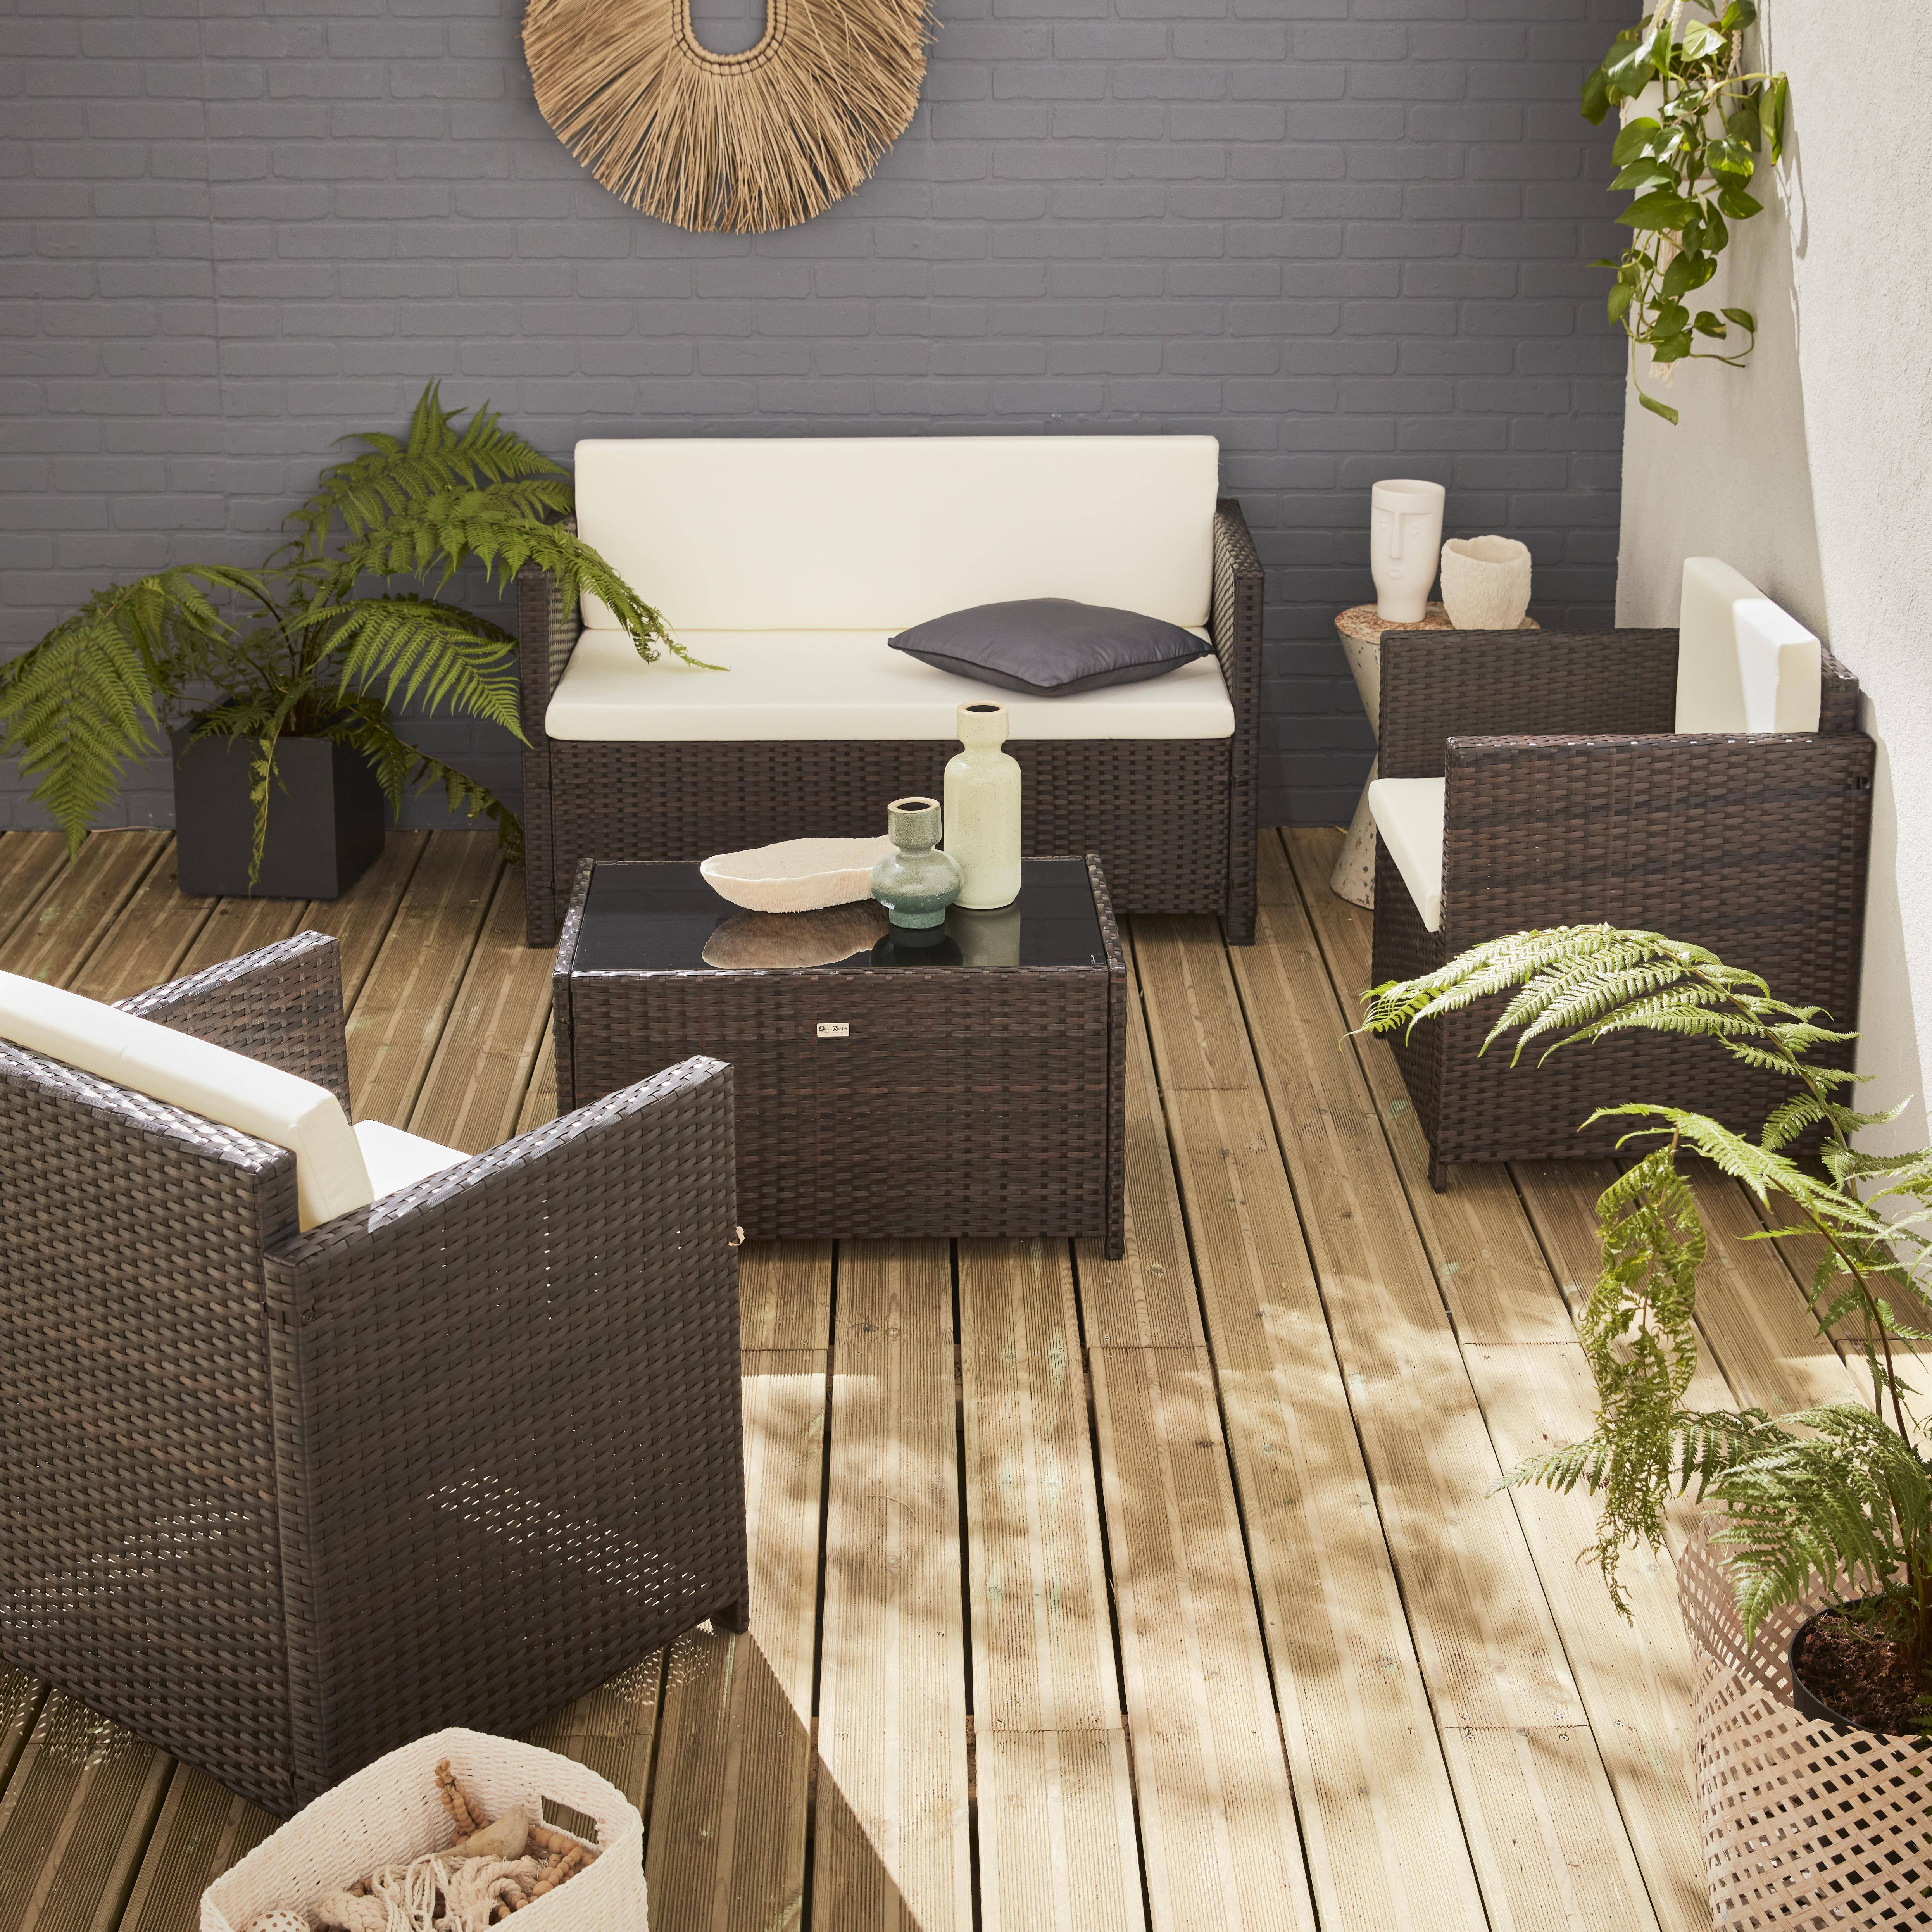 Muebles de jardín, conjunto sofá de exterior, Marrón crudo, 4 plazas, rattan sintético, resina trenzada - Perugia,sweeek,Photo1